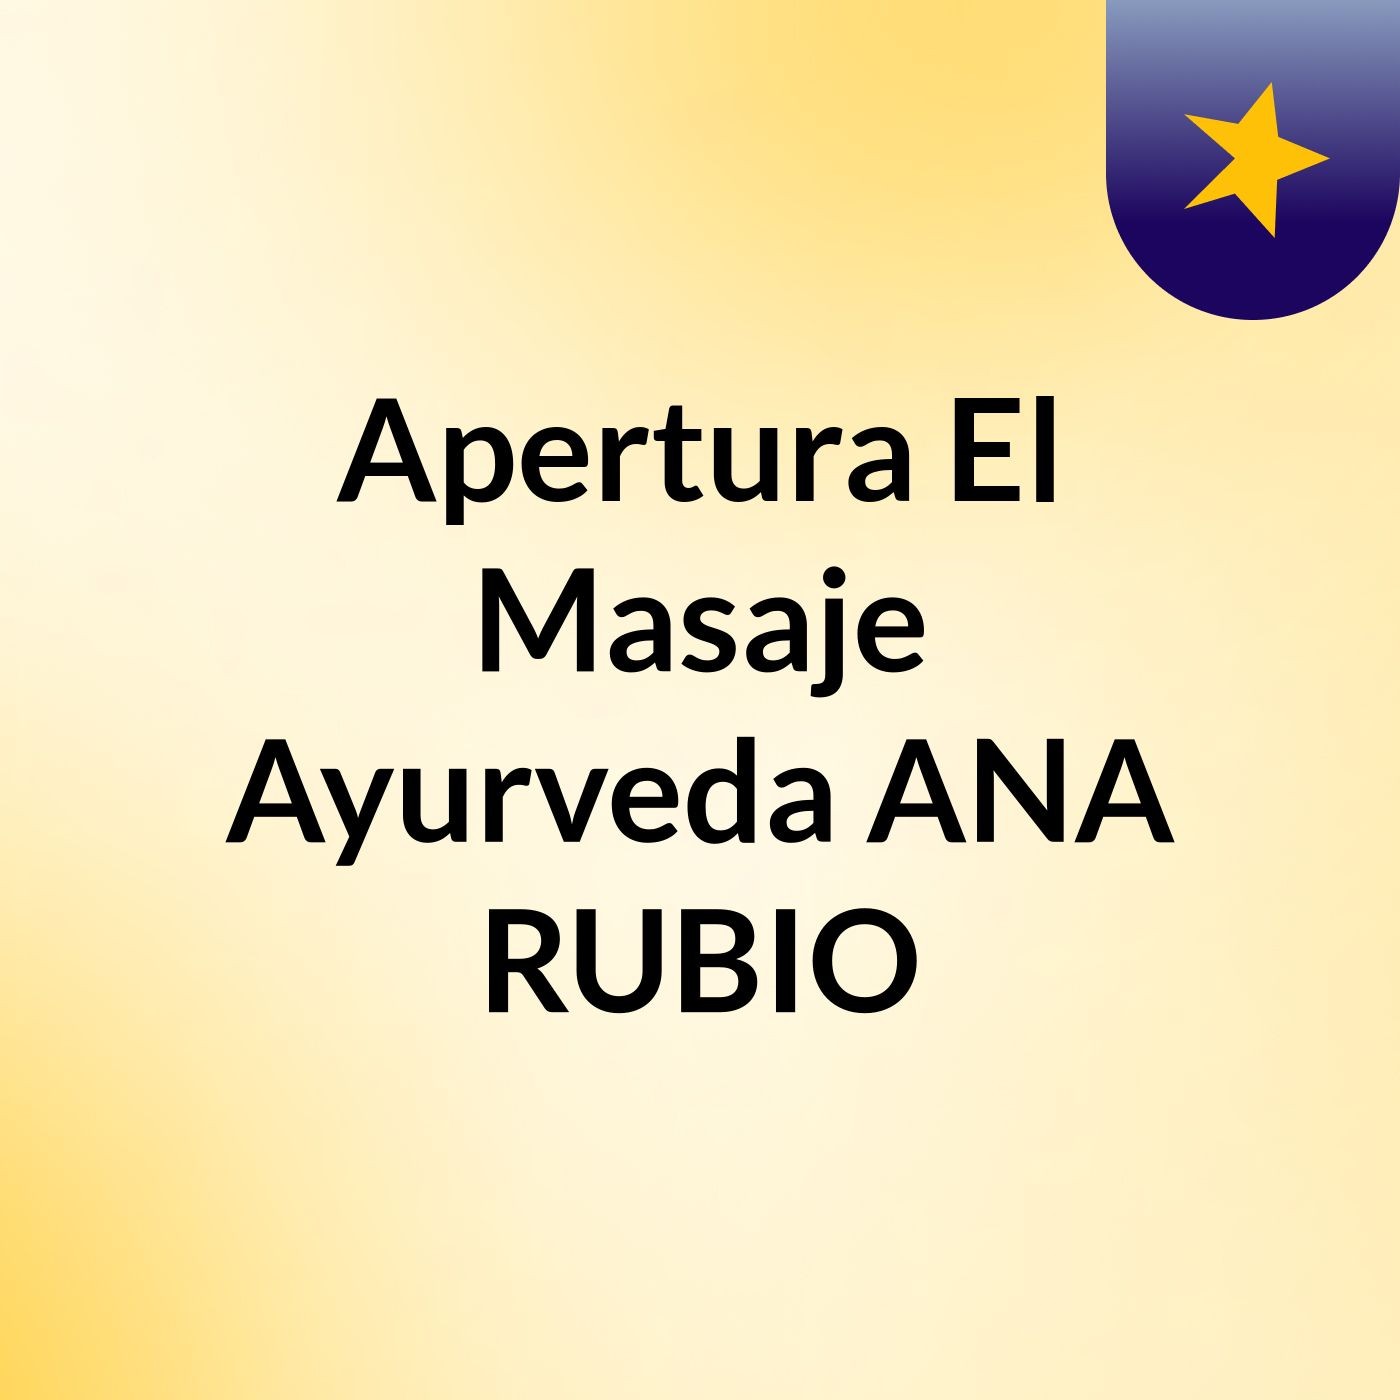 Episodio 2 - Apertura El Masaje Ayurveda ANA RUBIO